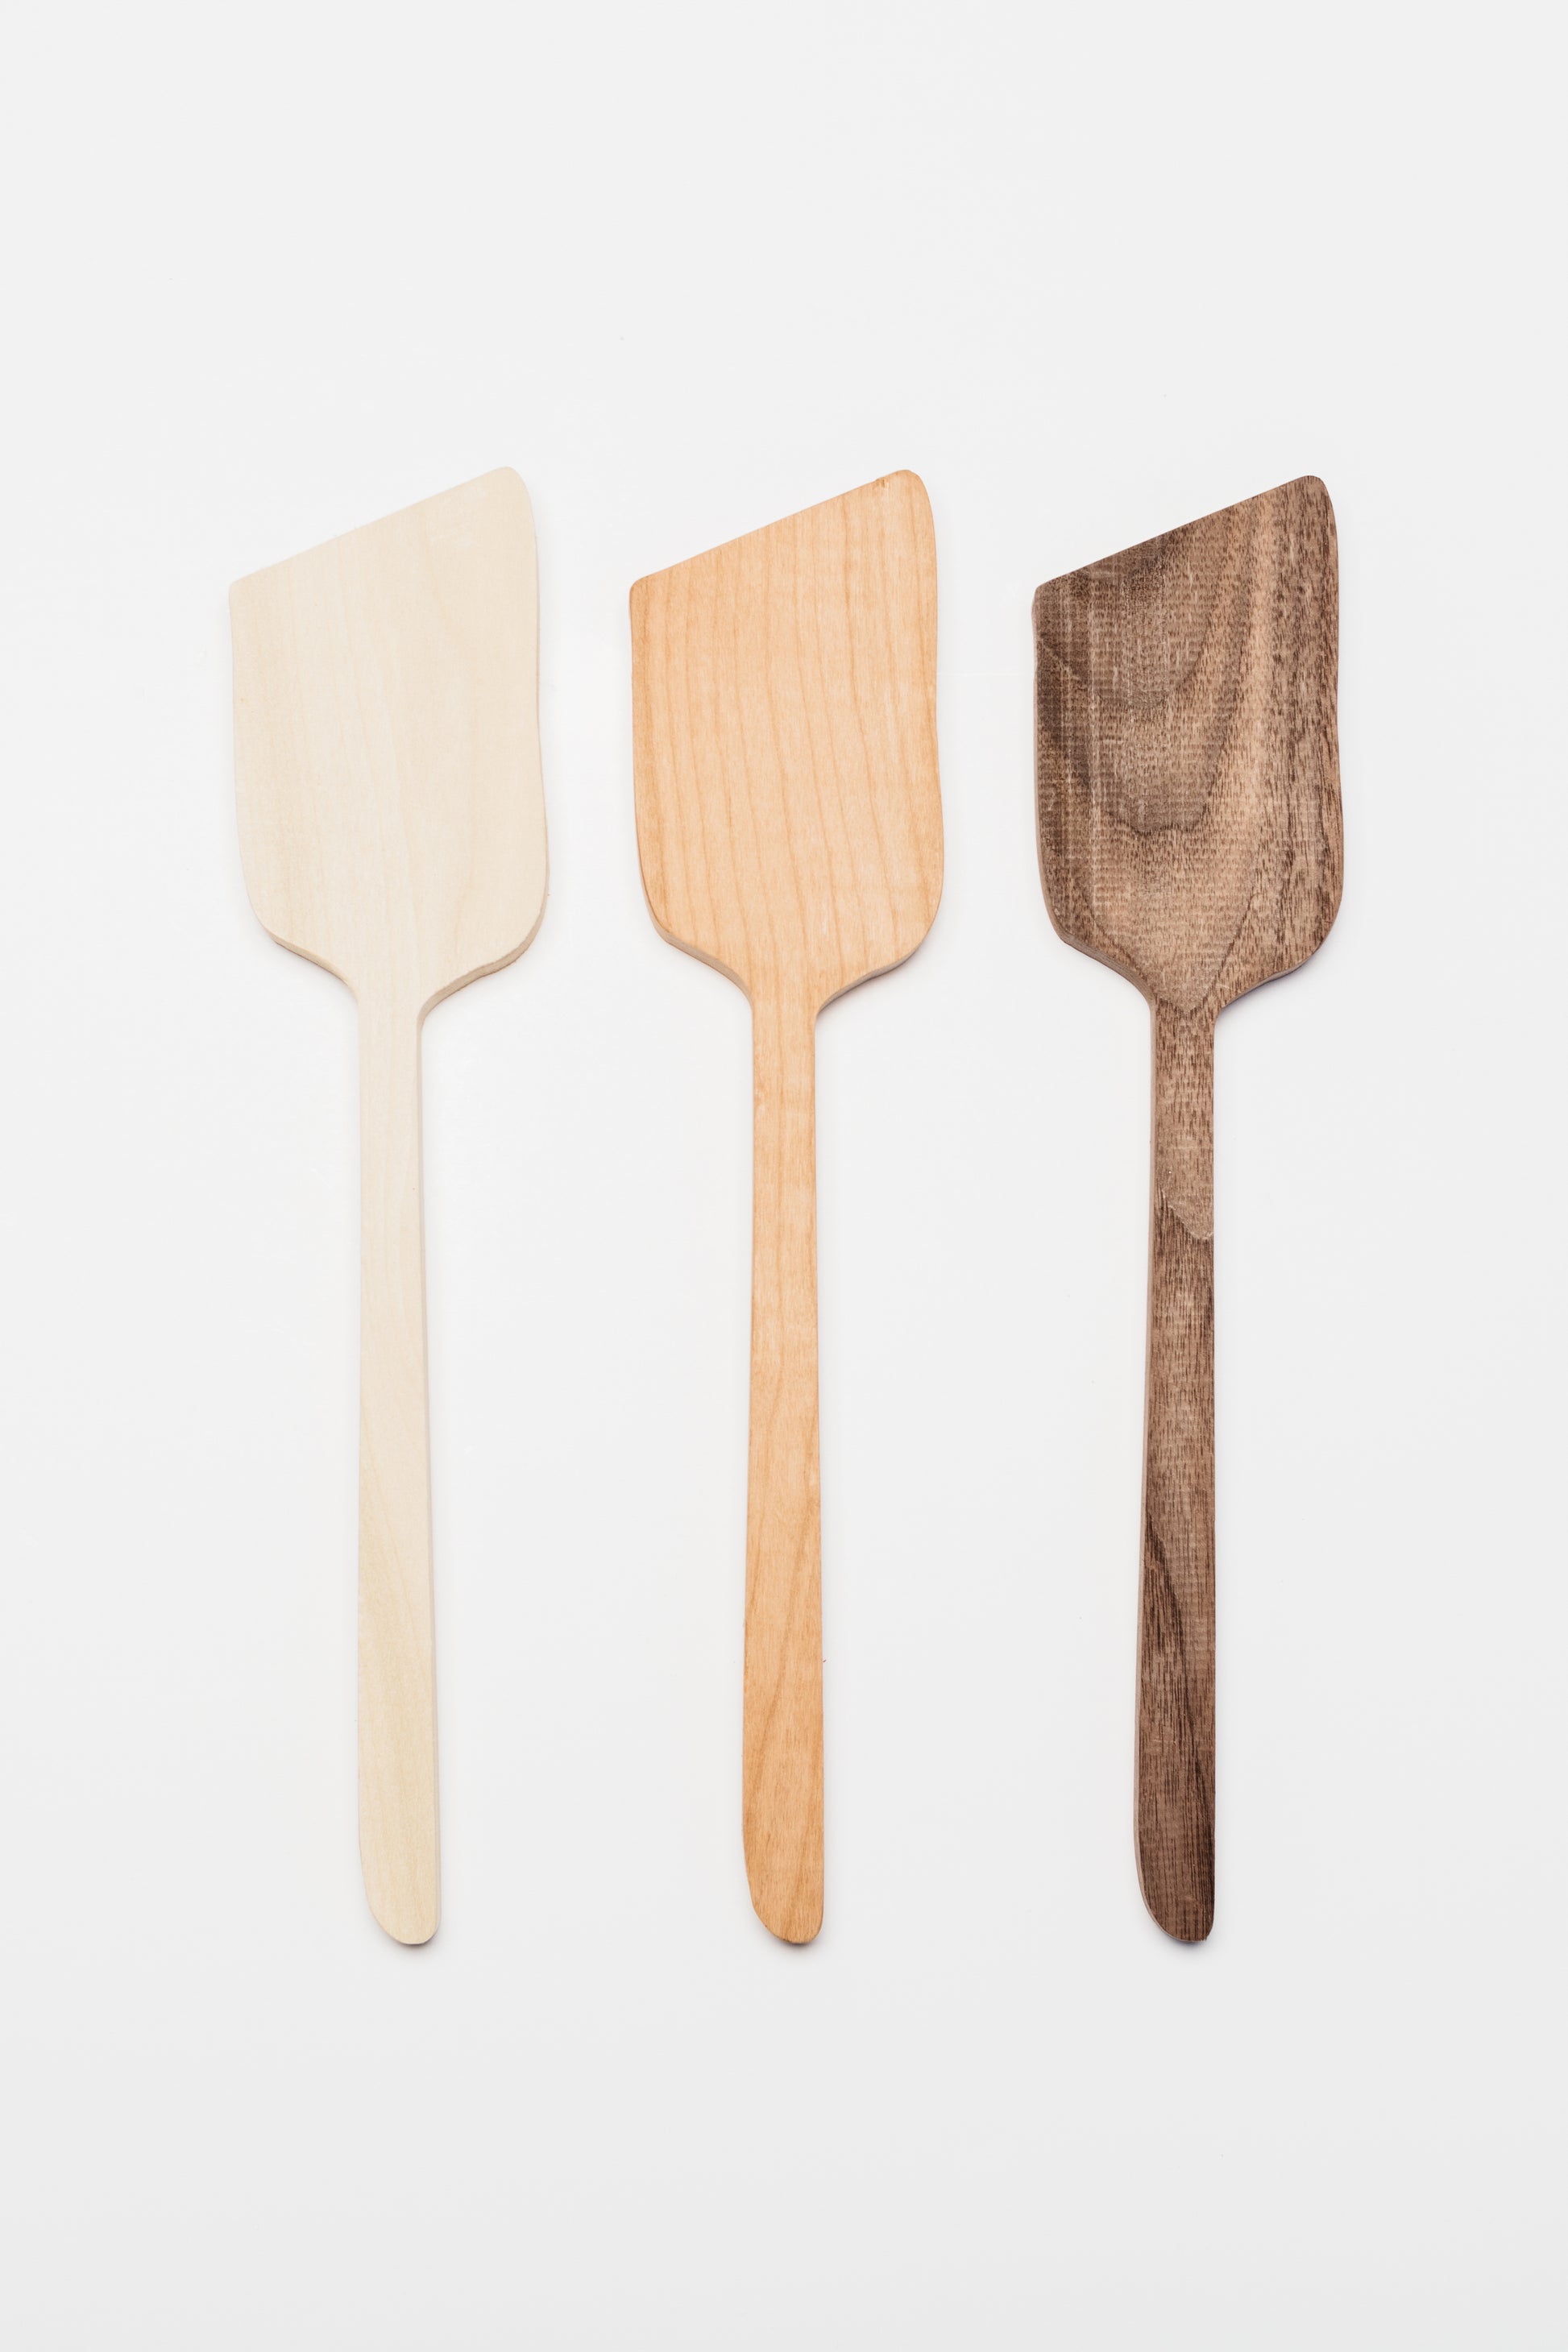 Poplar, cherry, and walnut spatula blanks. By Melanie Abrantes Designs.